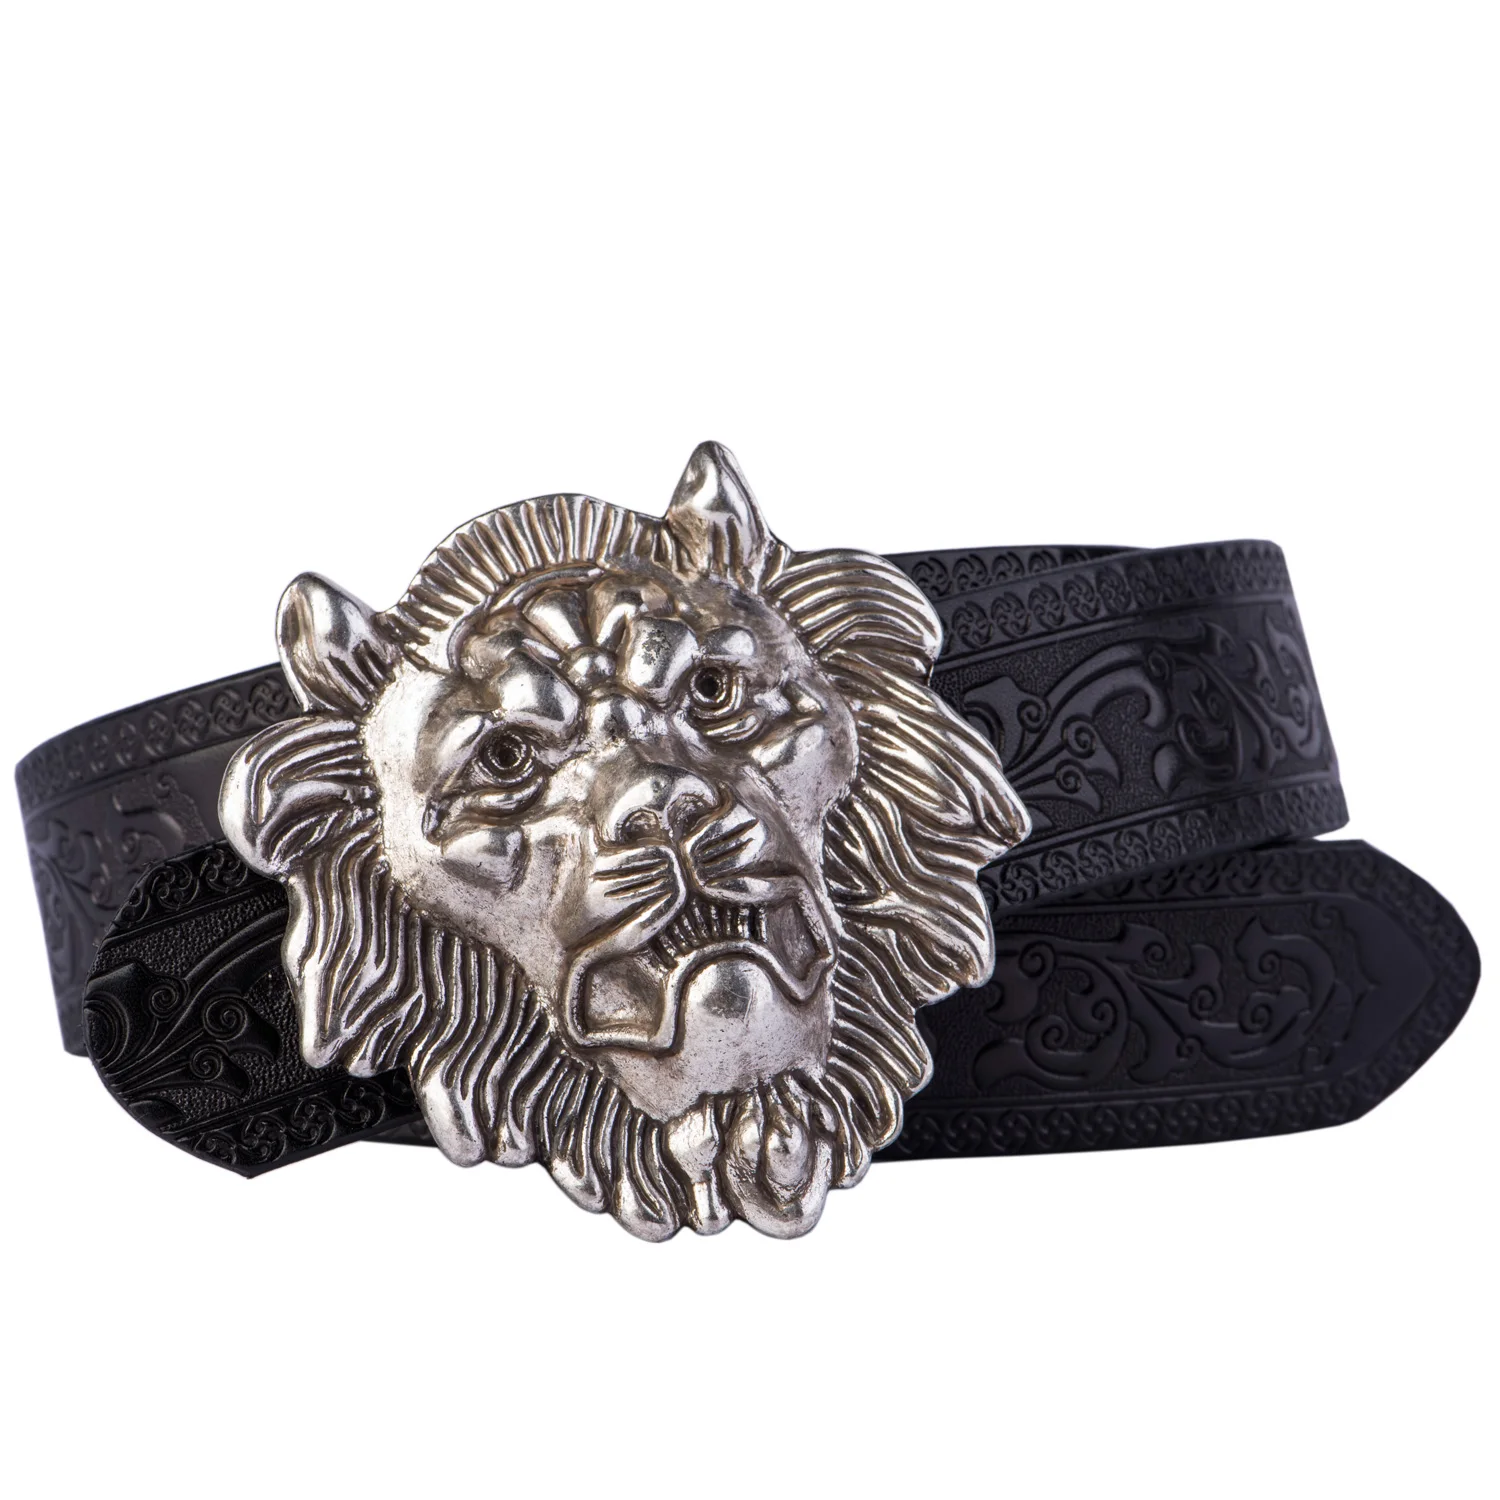 Genuine Leather Strap Male Belts For Men Women Cowhide Vintage Lion Head Buckle Belt Carving Vines